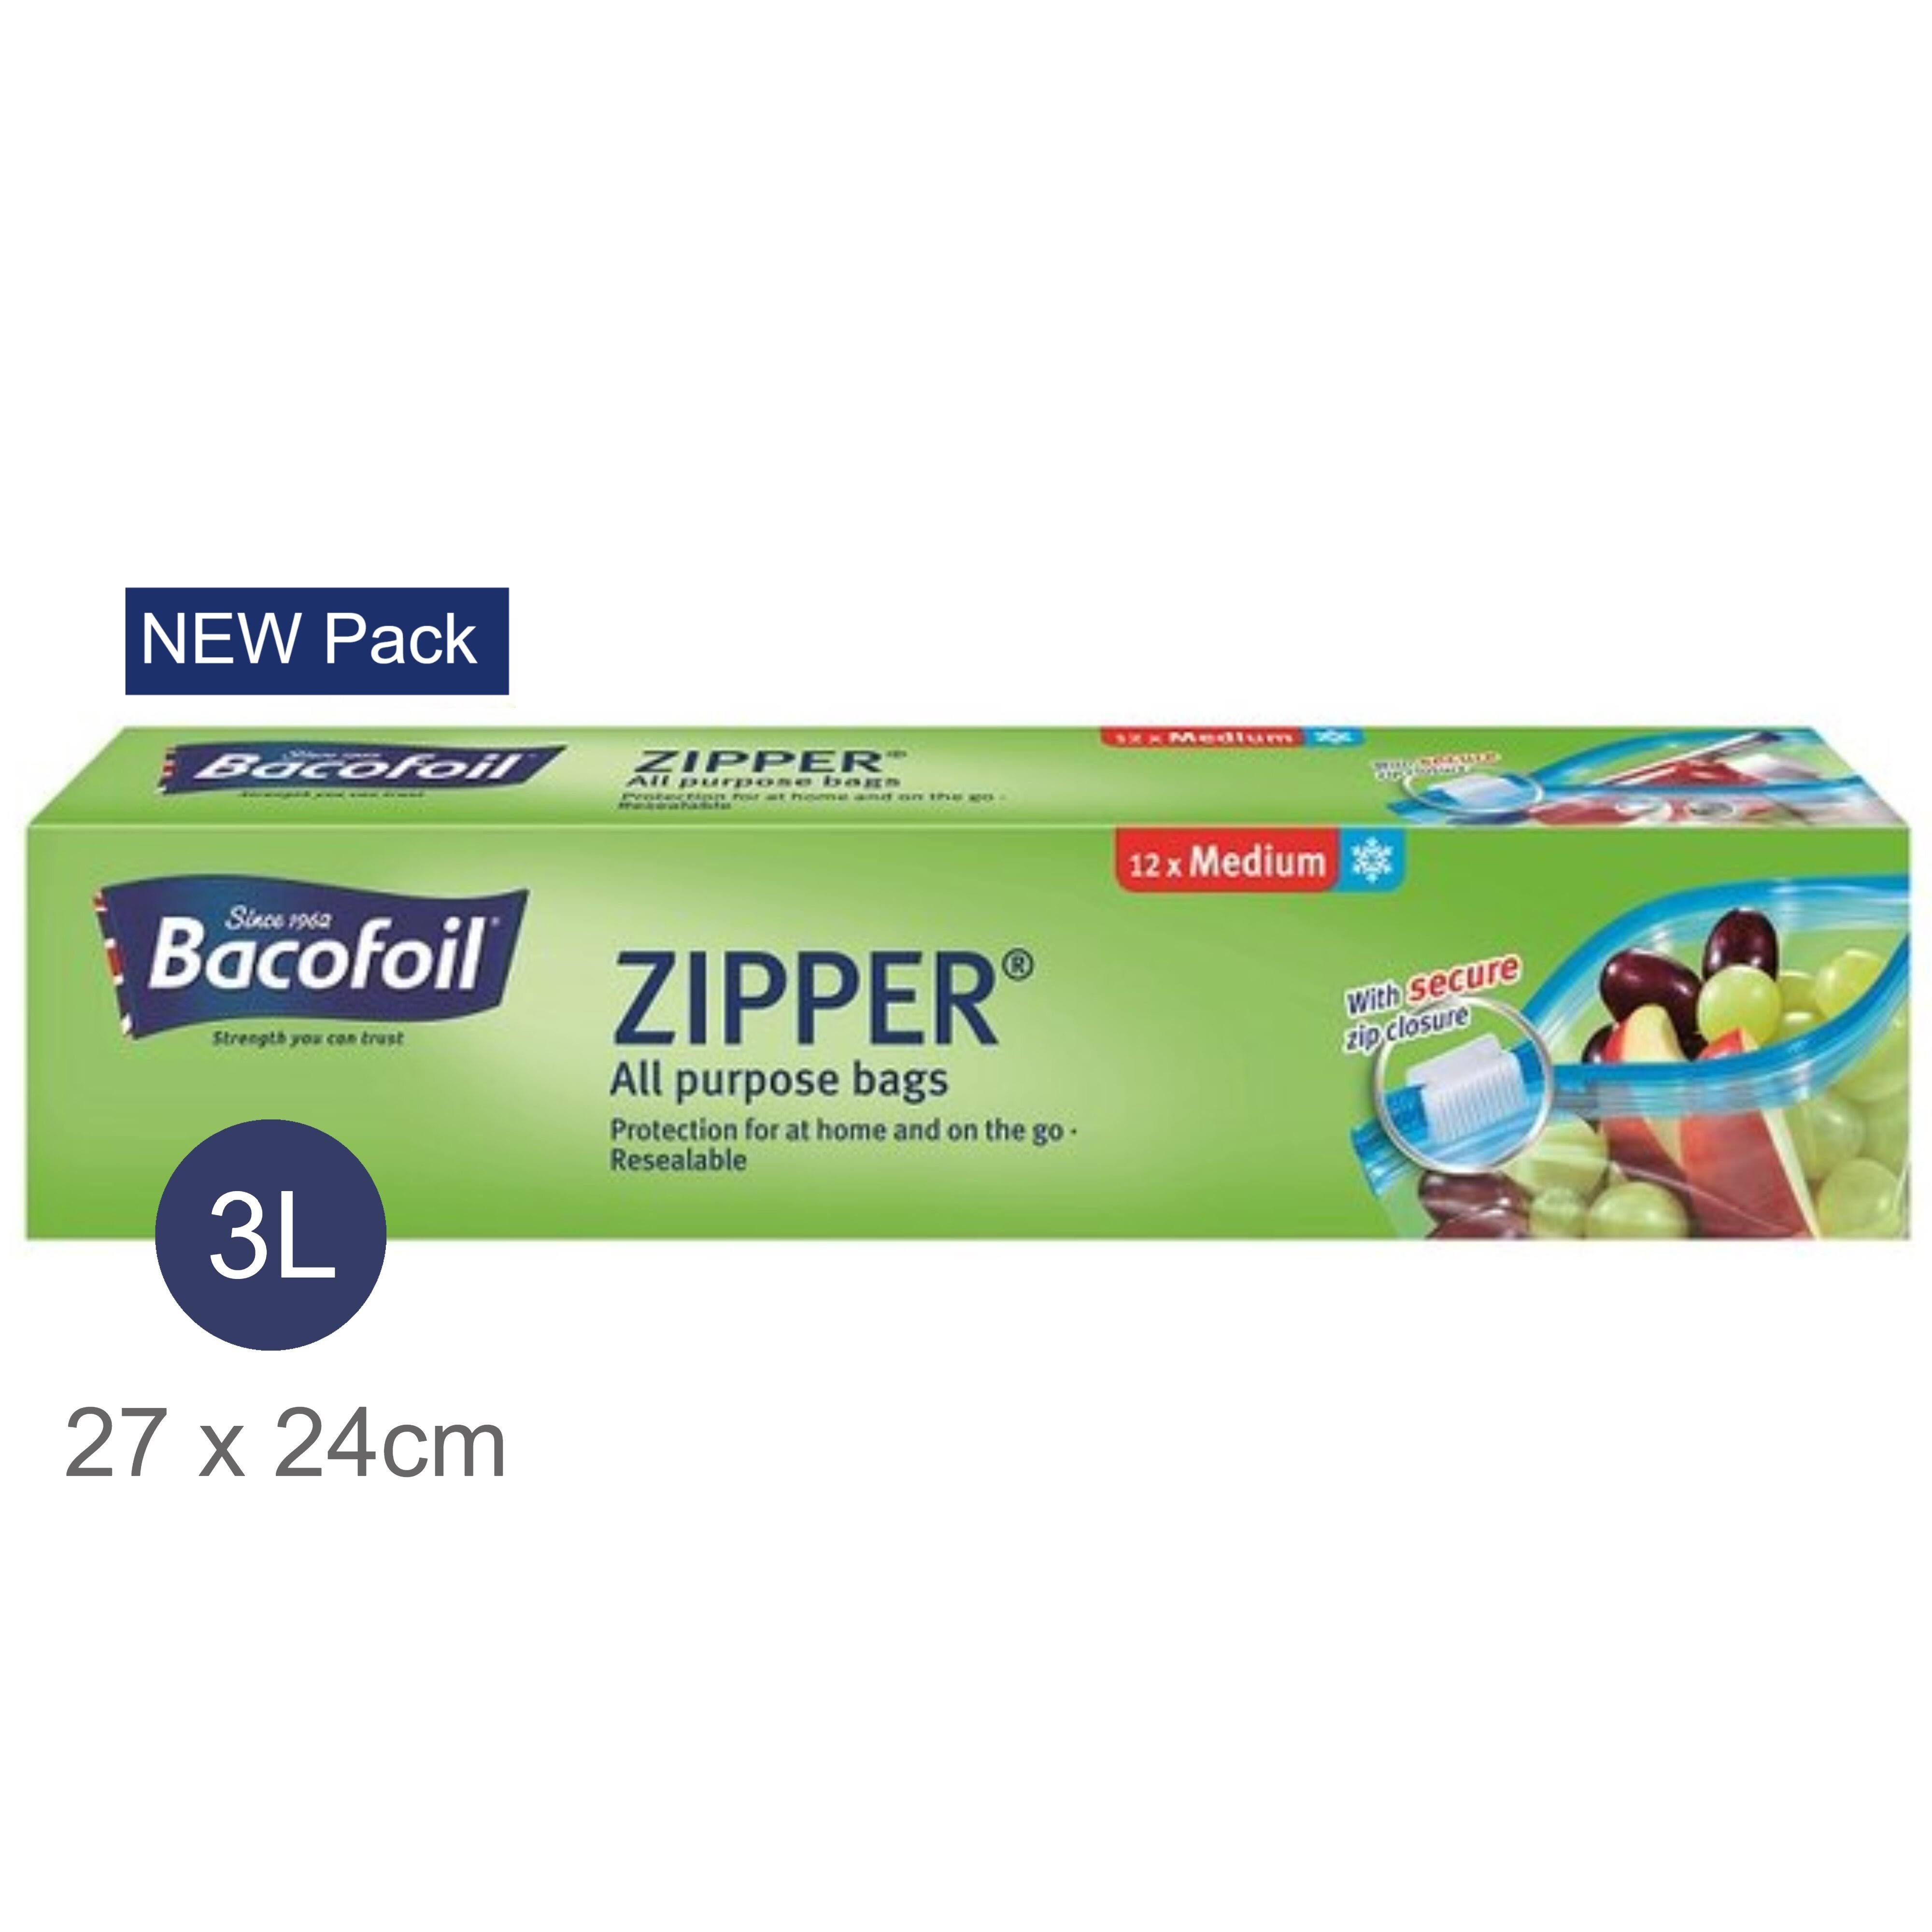 2x Bacofoil Zipper Food Freezer All Purpose Bags 12 Medium Bags